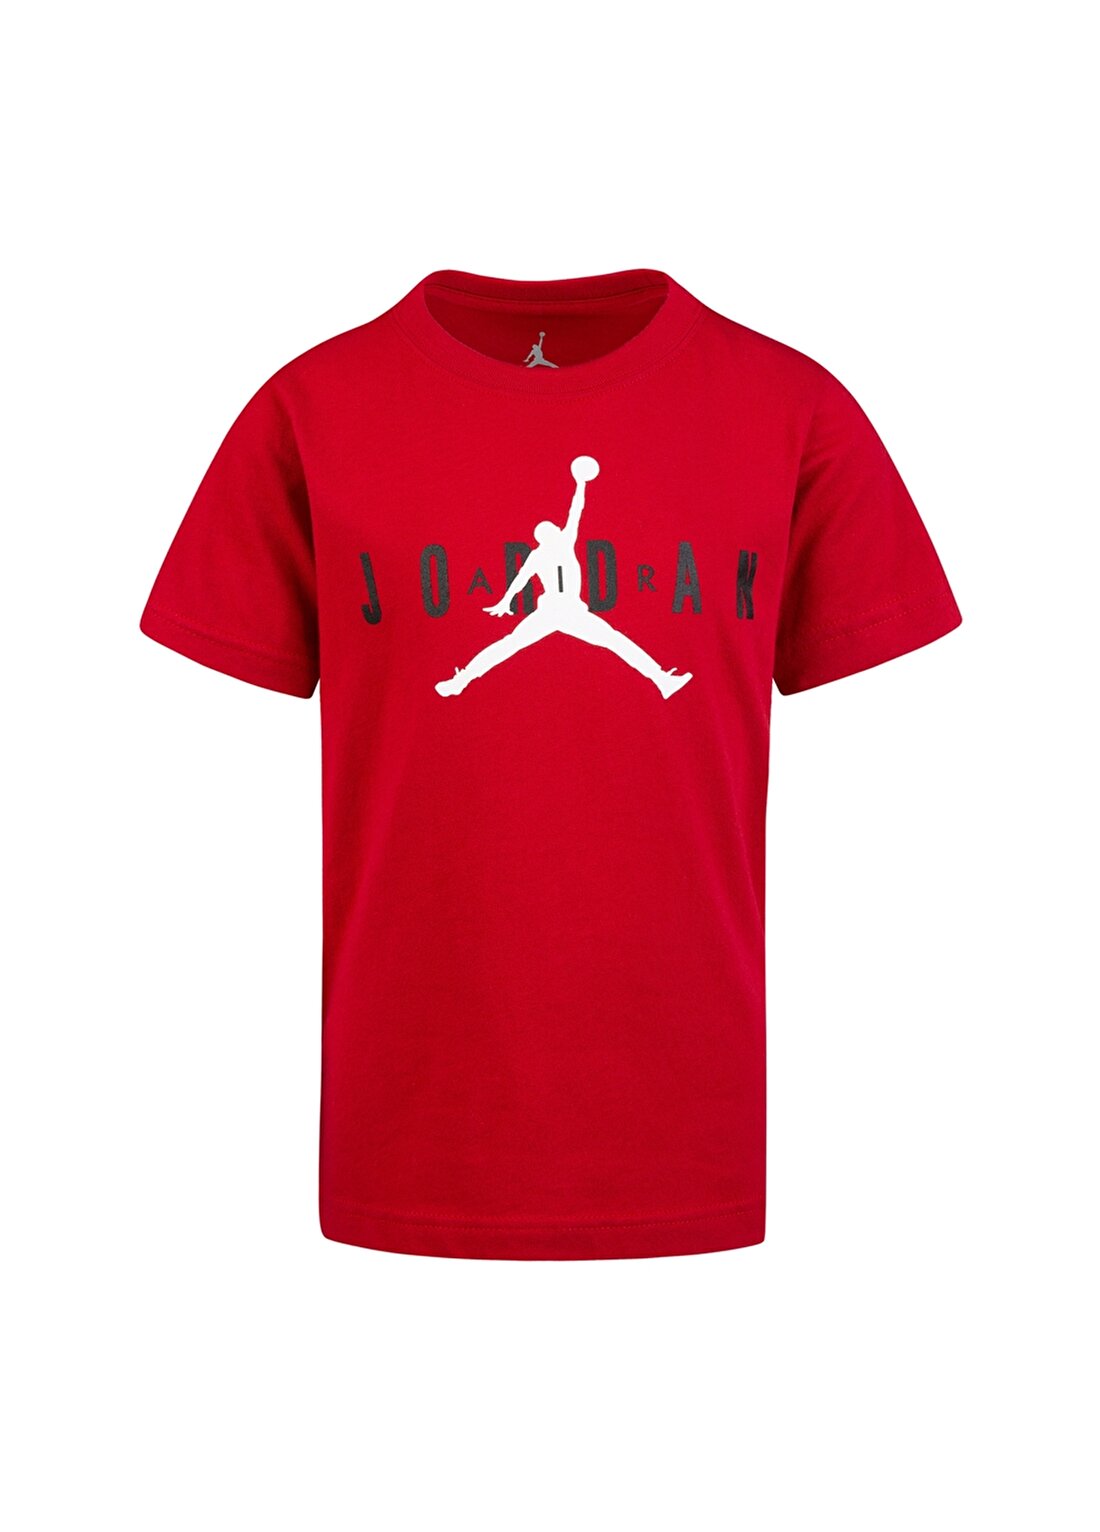 Nike 855175-R78 JDB Brand Tee 5 Air Jordan Brand Tee T-Shirt